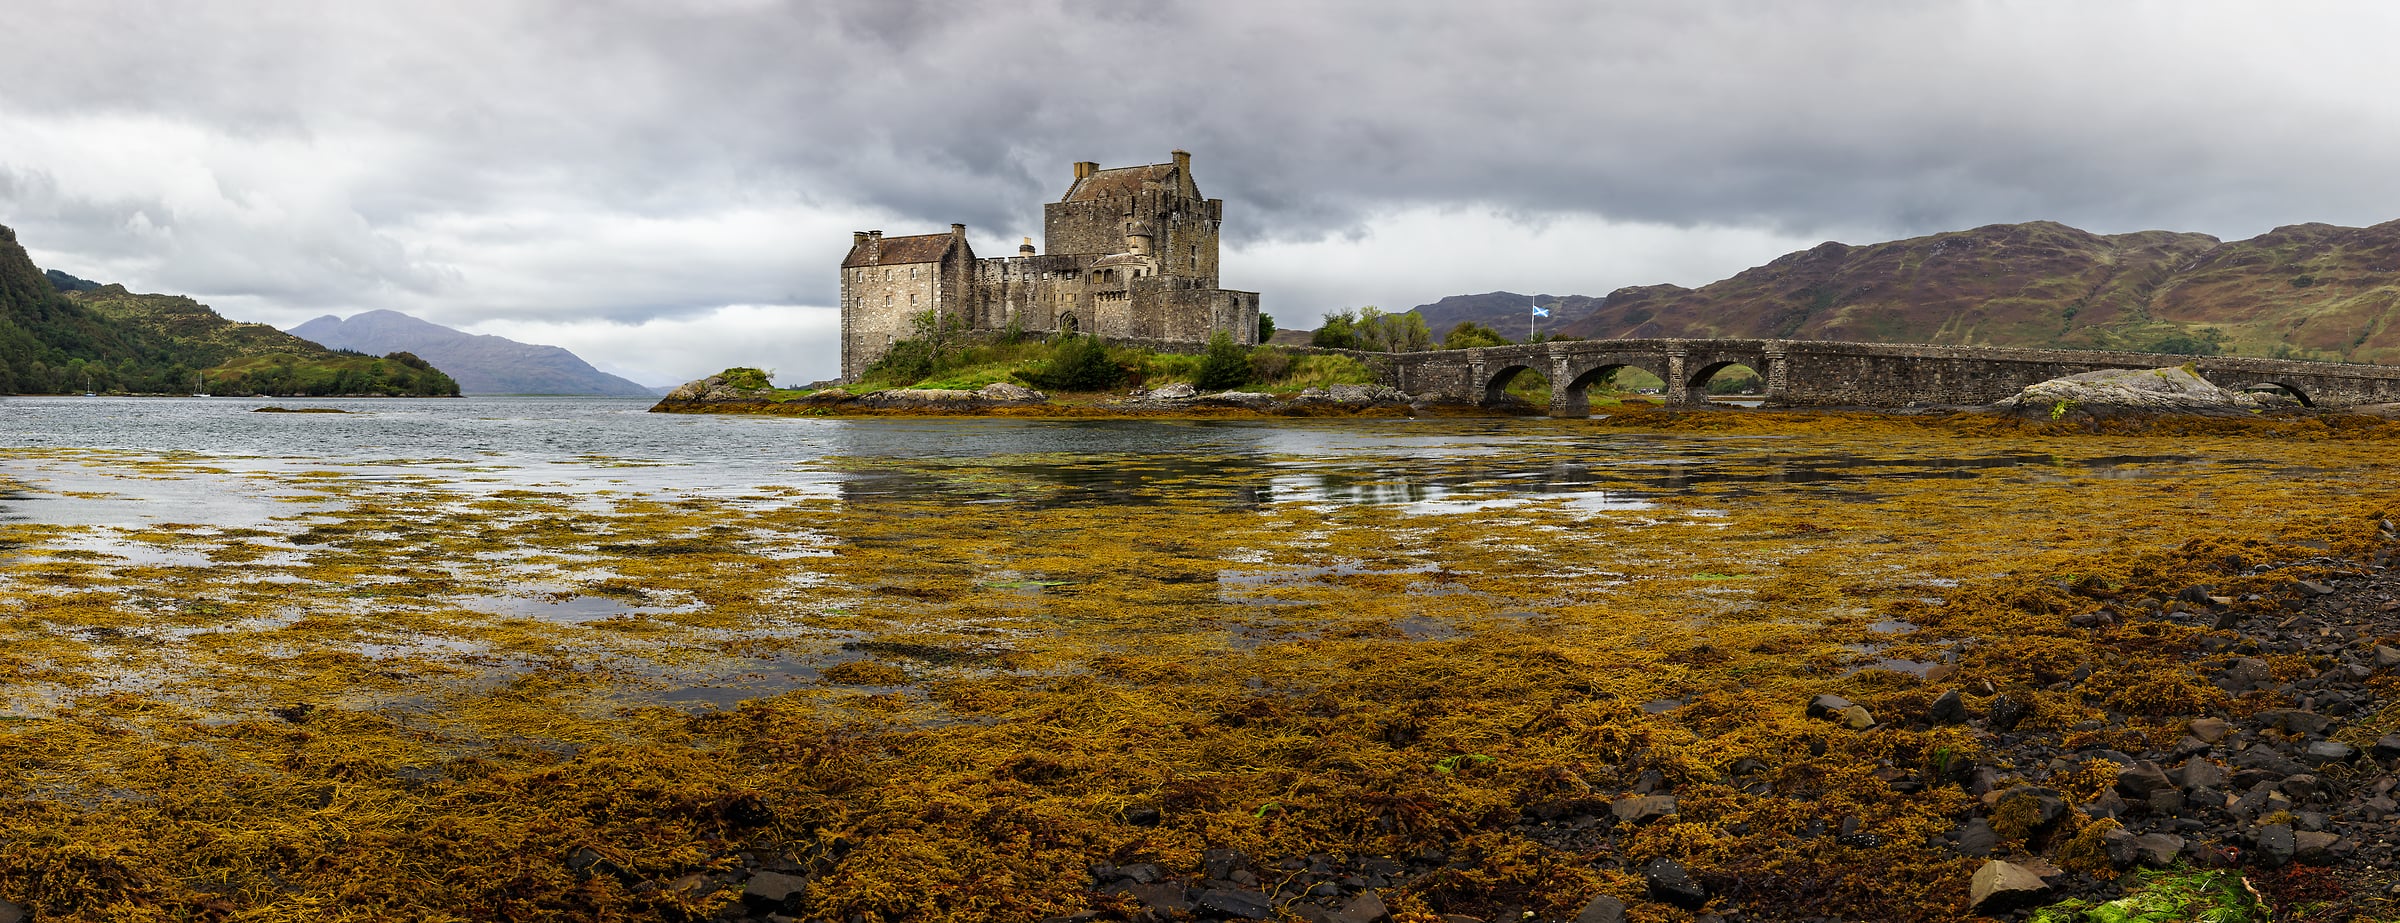 2,036 megapixels! A very high resolution, large-format VAST photo print of a Scotland landscape with a castle; photograph created by Scott Dimond at Eilean Donan Castle, Dornie, Kyle of Lochalsh, United Kingdon.